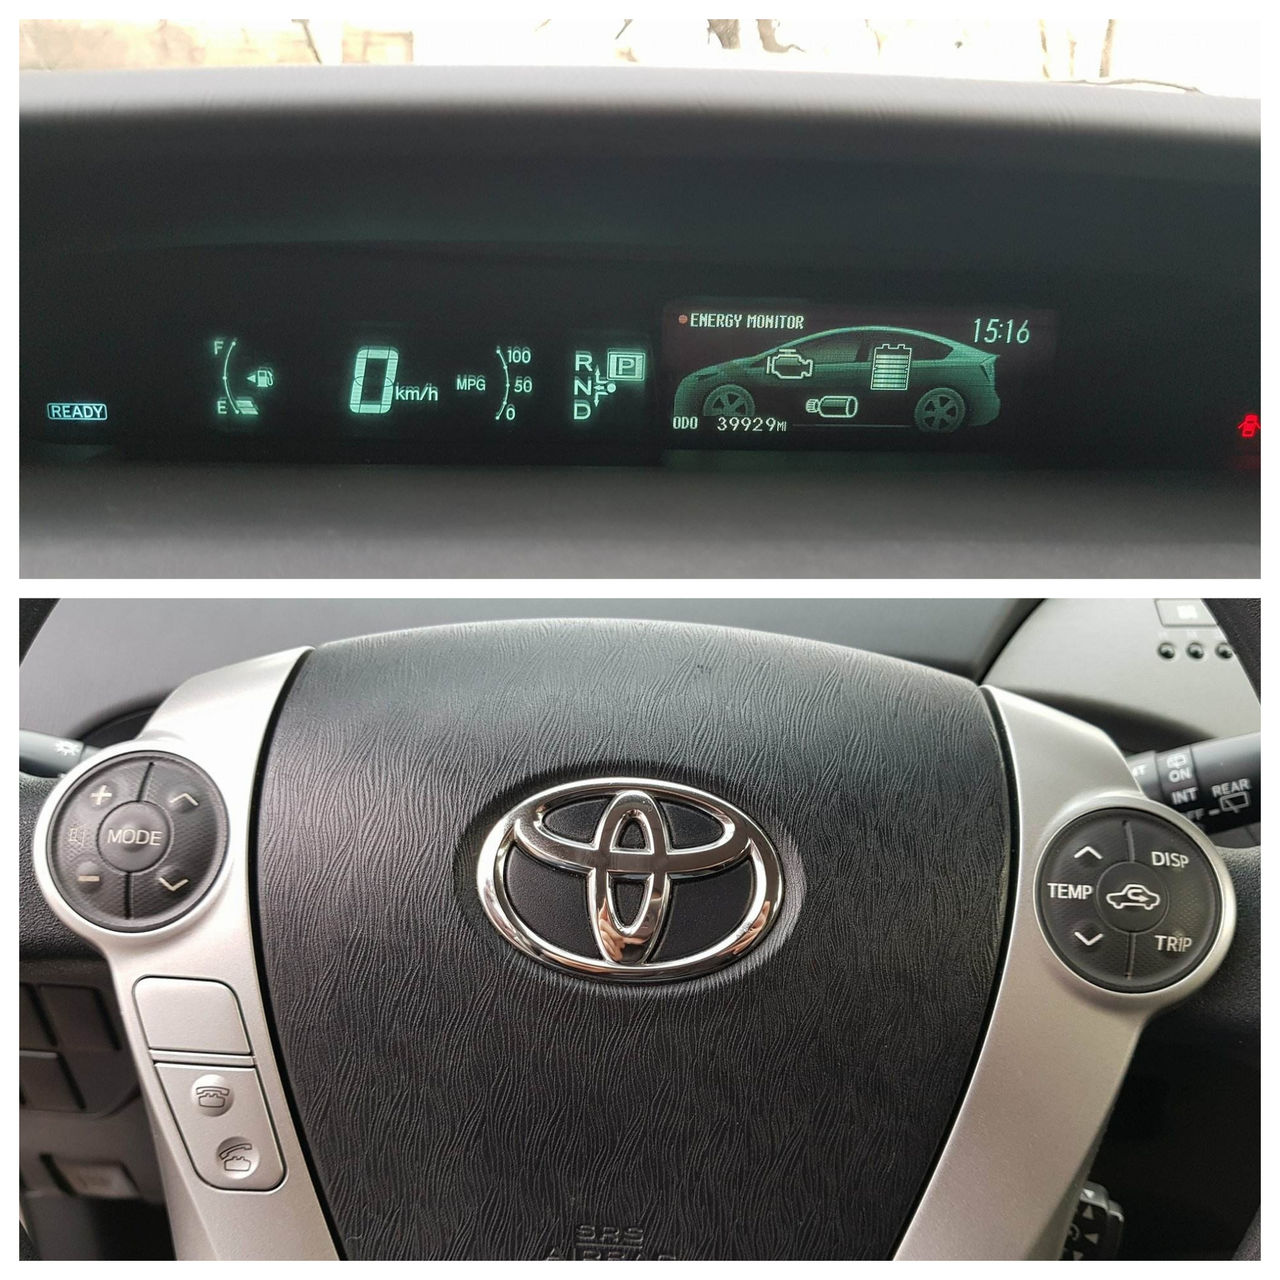 Toyota Prius -Masini la Procat Chisinău Ieftine5